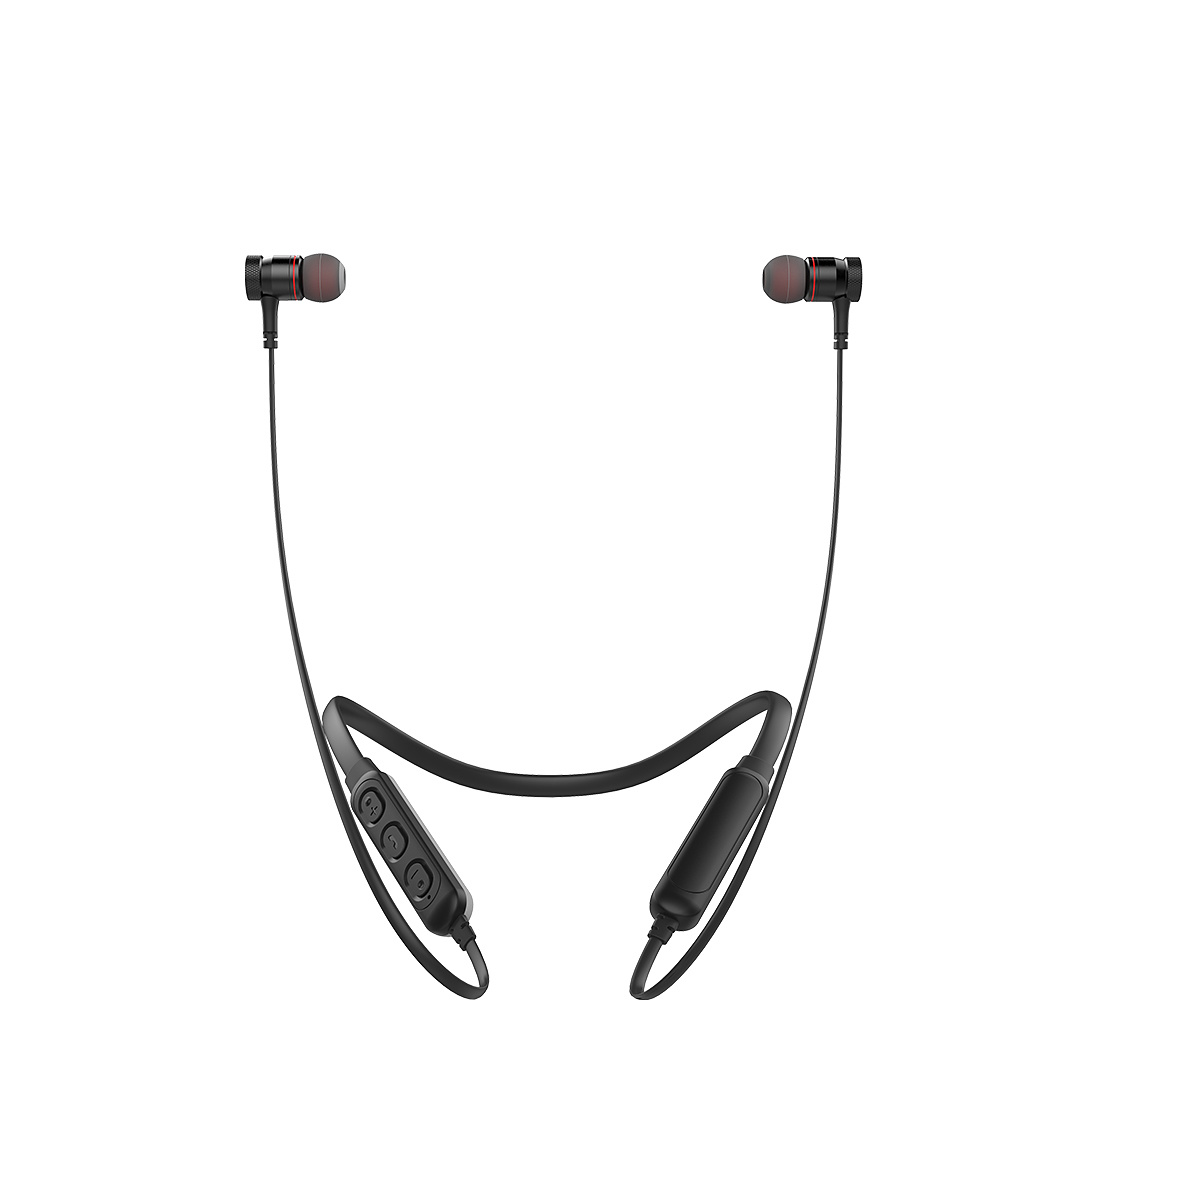 AWEI G10BL In Ear trådlösa hörlurar med nackband, Bluetooth